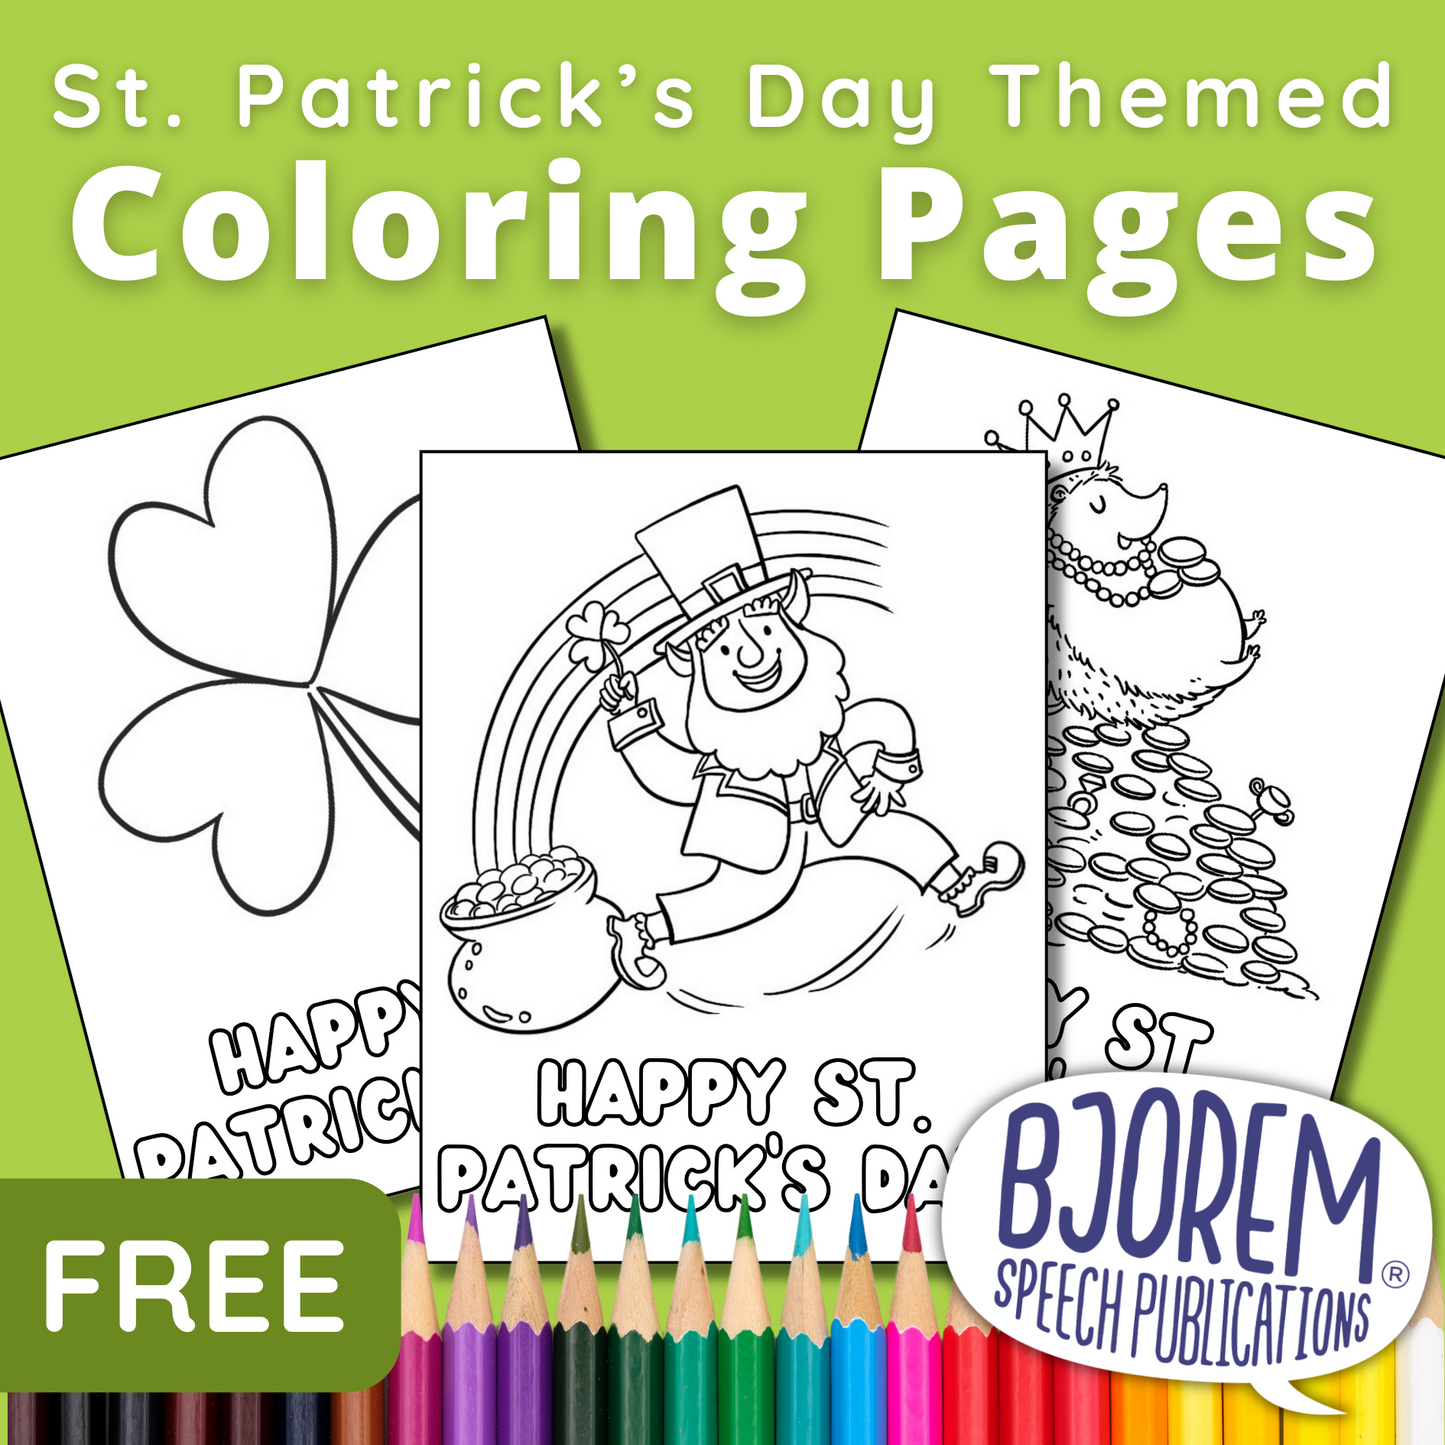 St. Patrick's Themed Coloring Pages {Bjorem Speech} - Free Digital Download